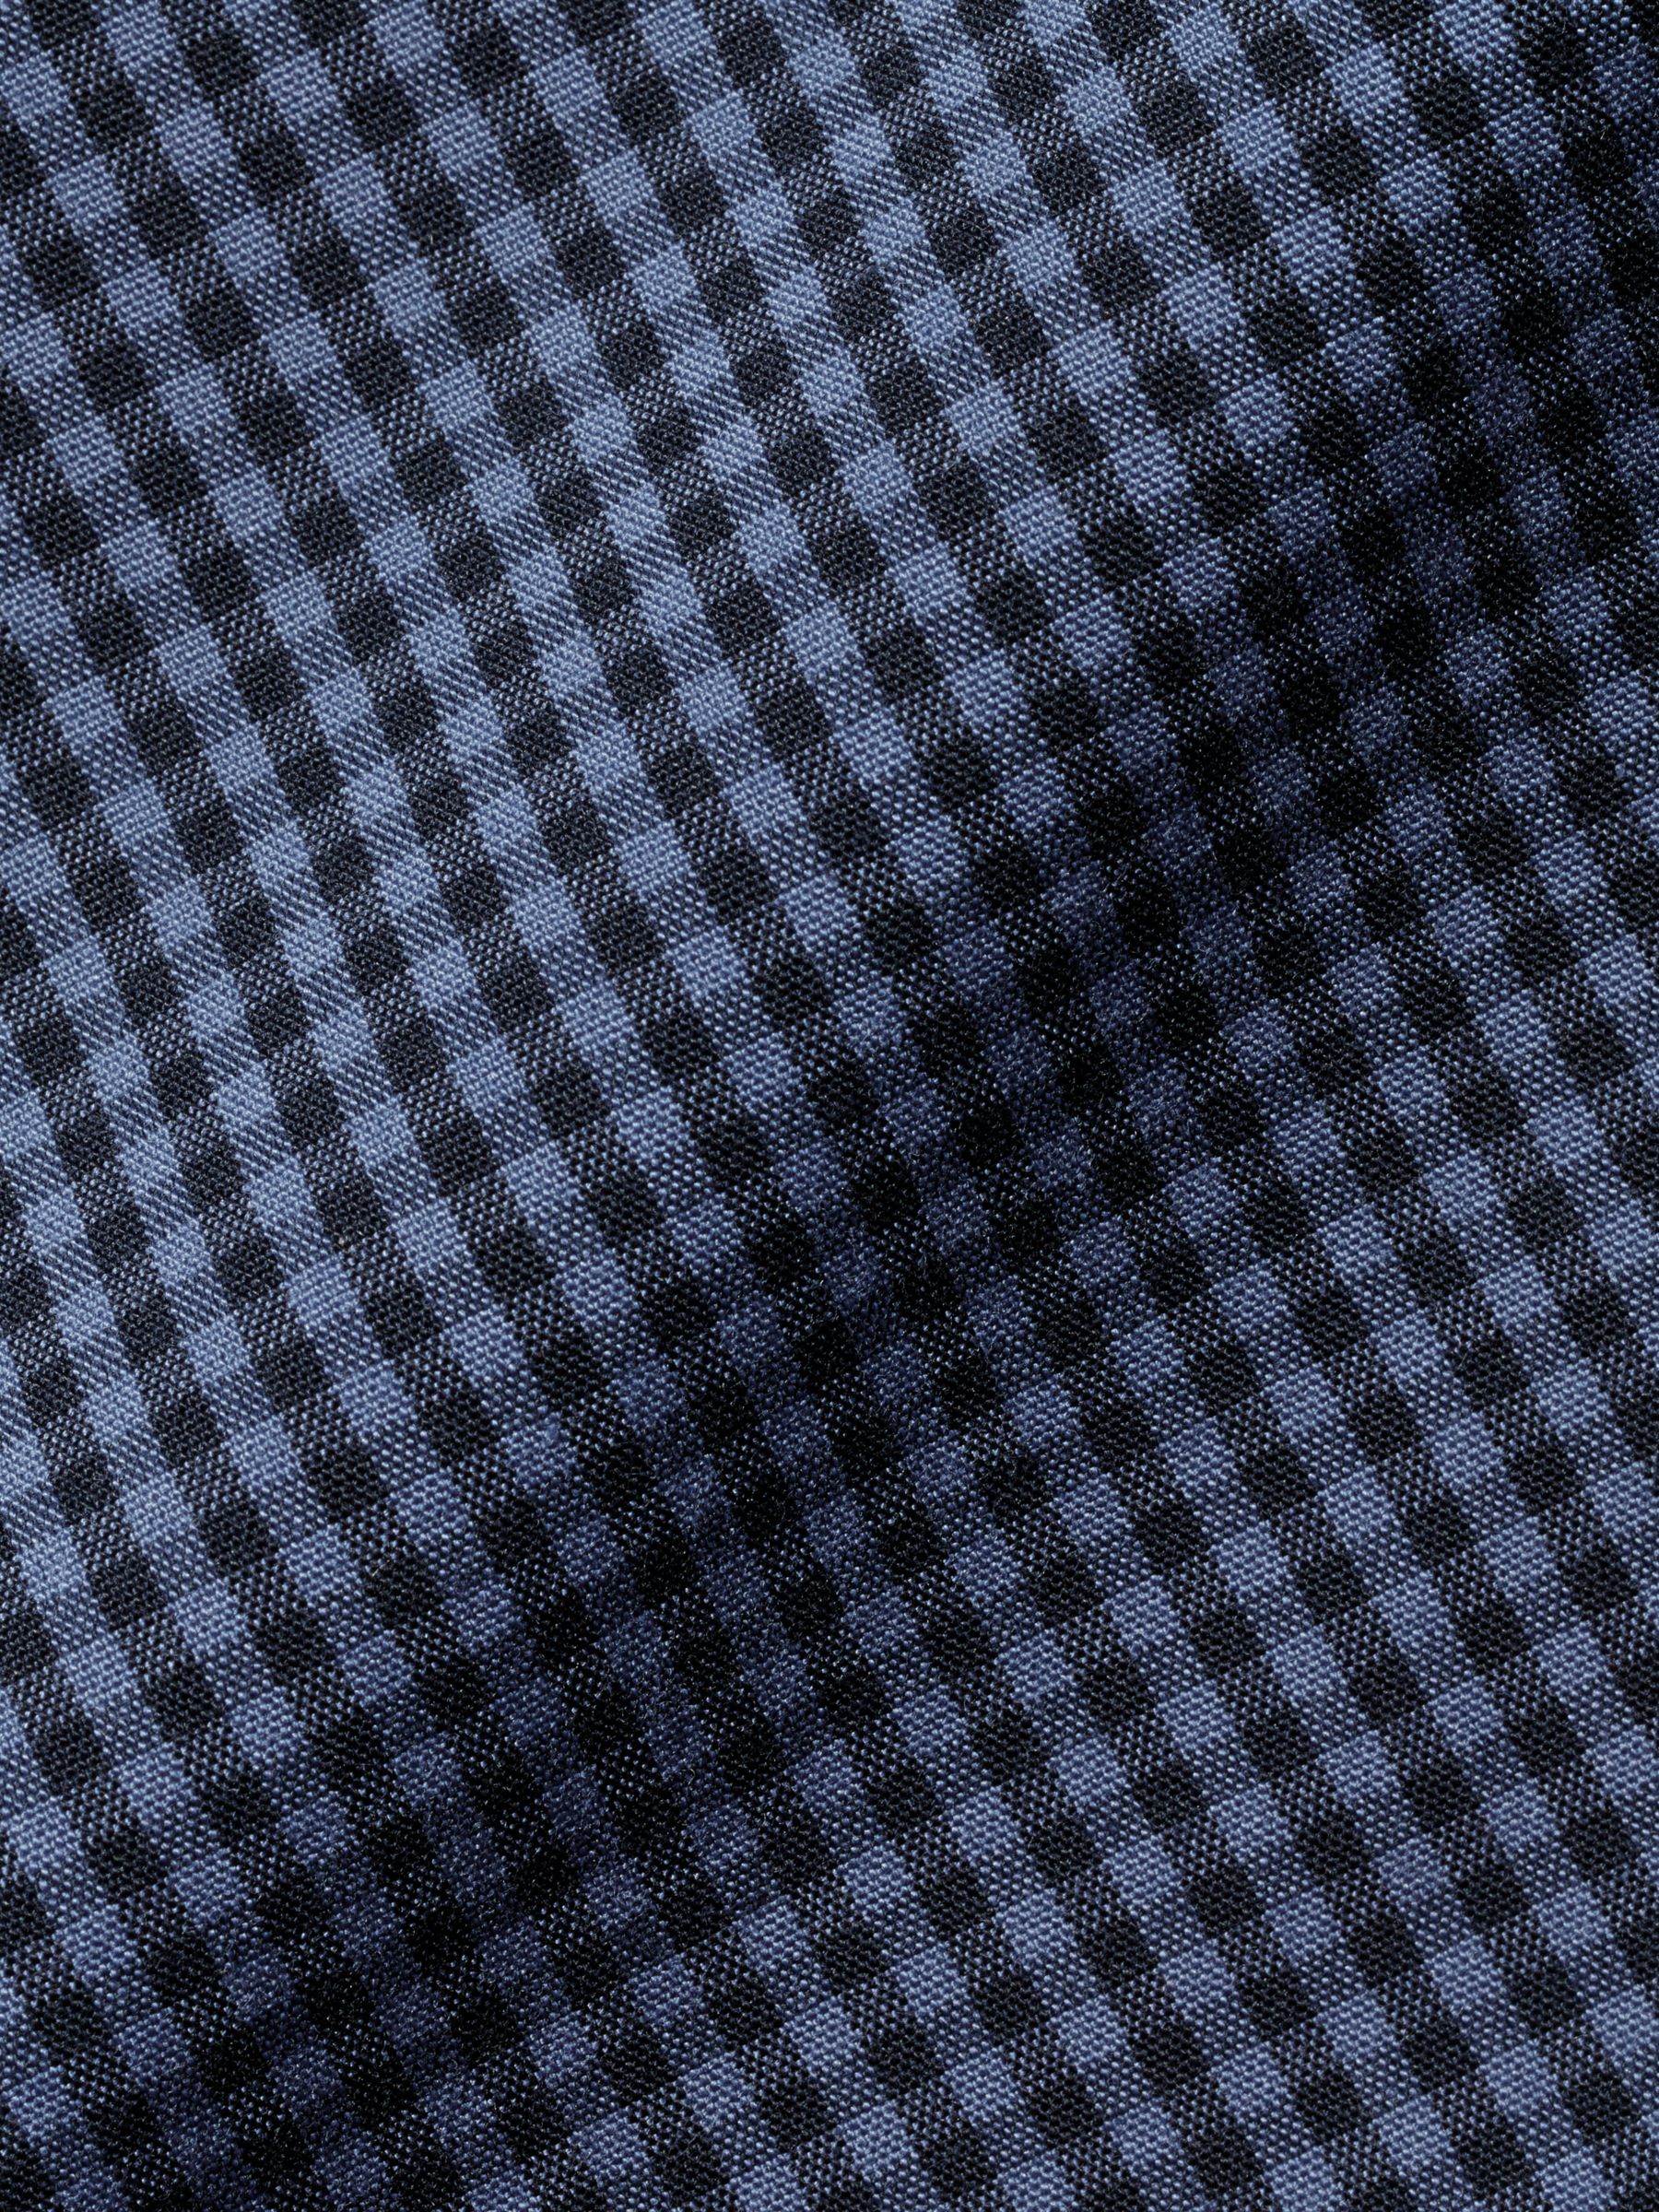 Charles Tyrwhitt Poplin Weave Check Shirt, Indigo Blue, S